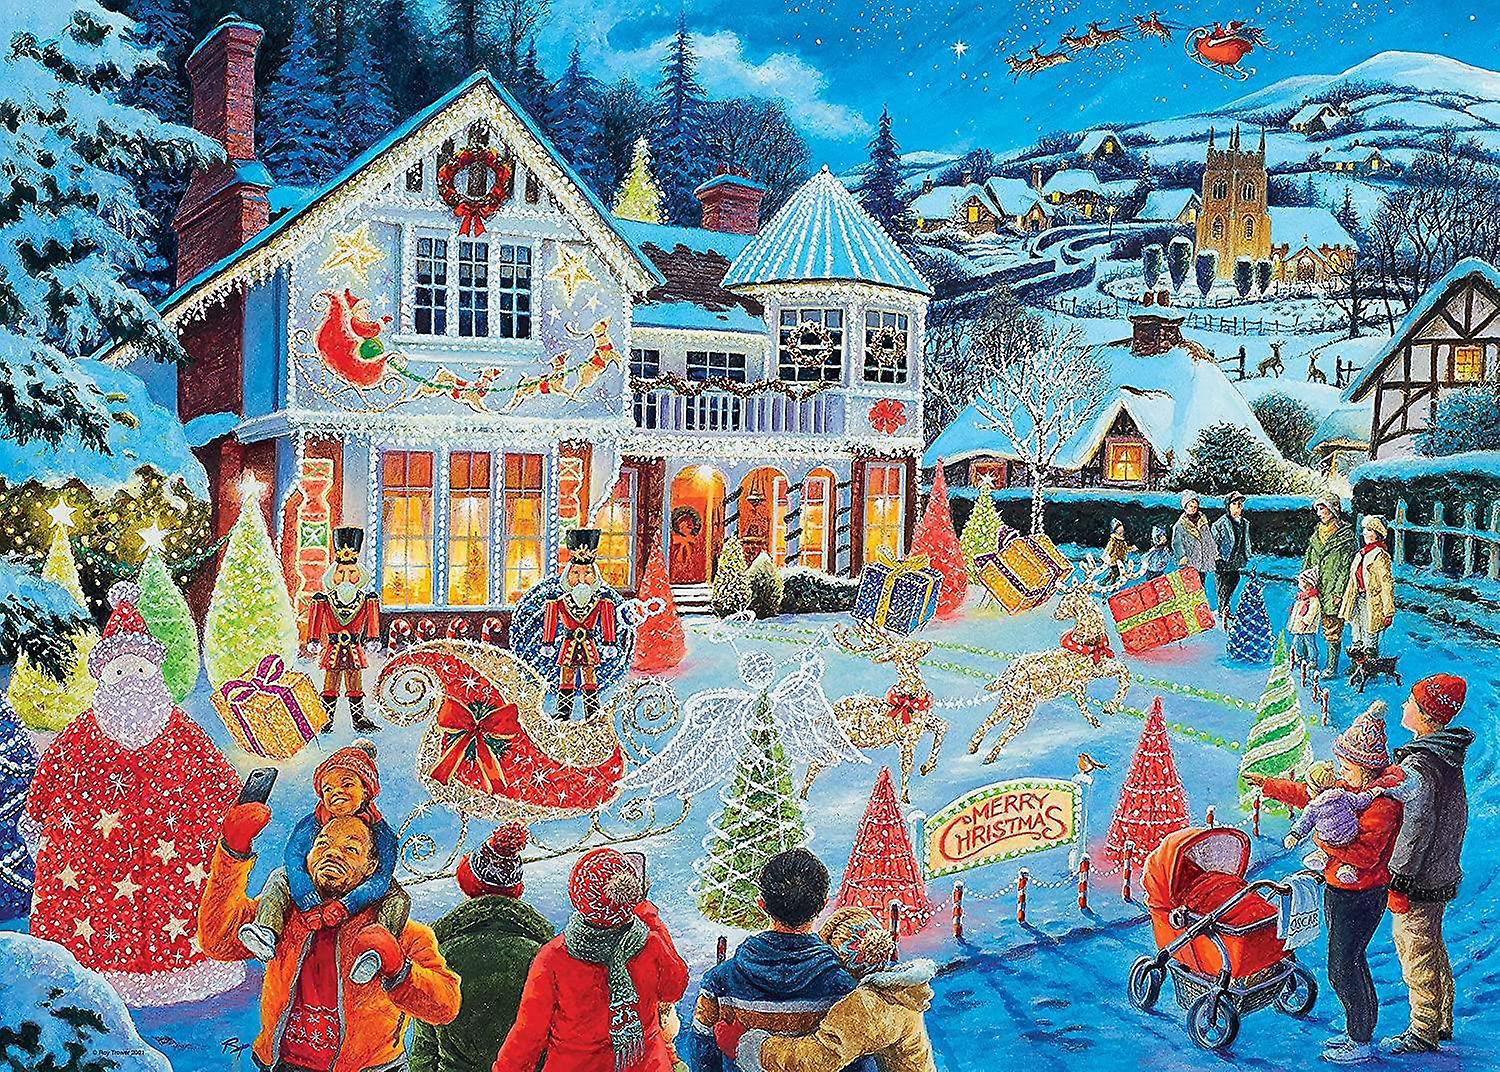 The Christmas House Christmas Jigsaw Puzzle